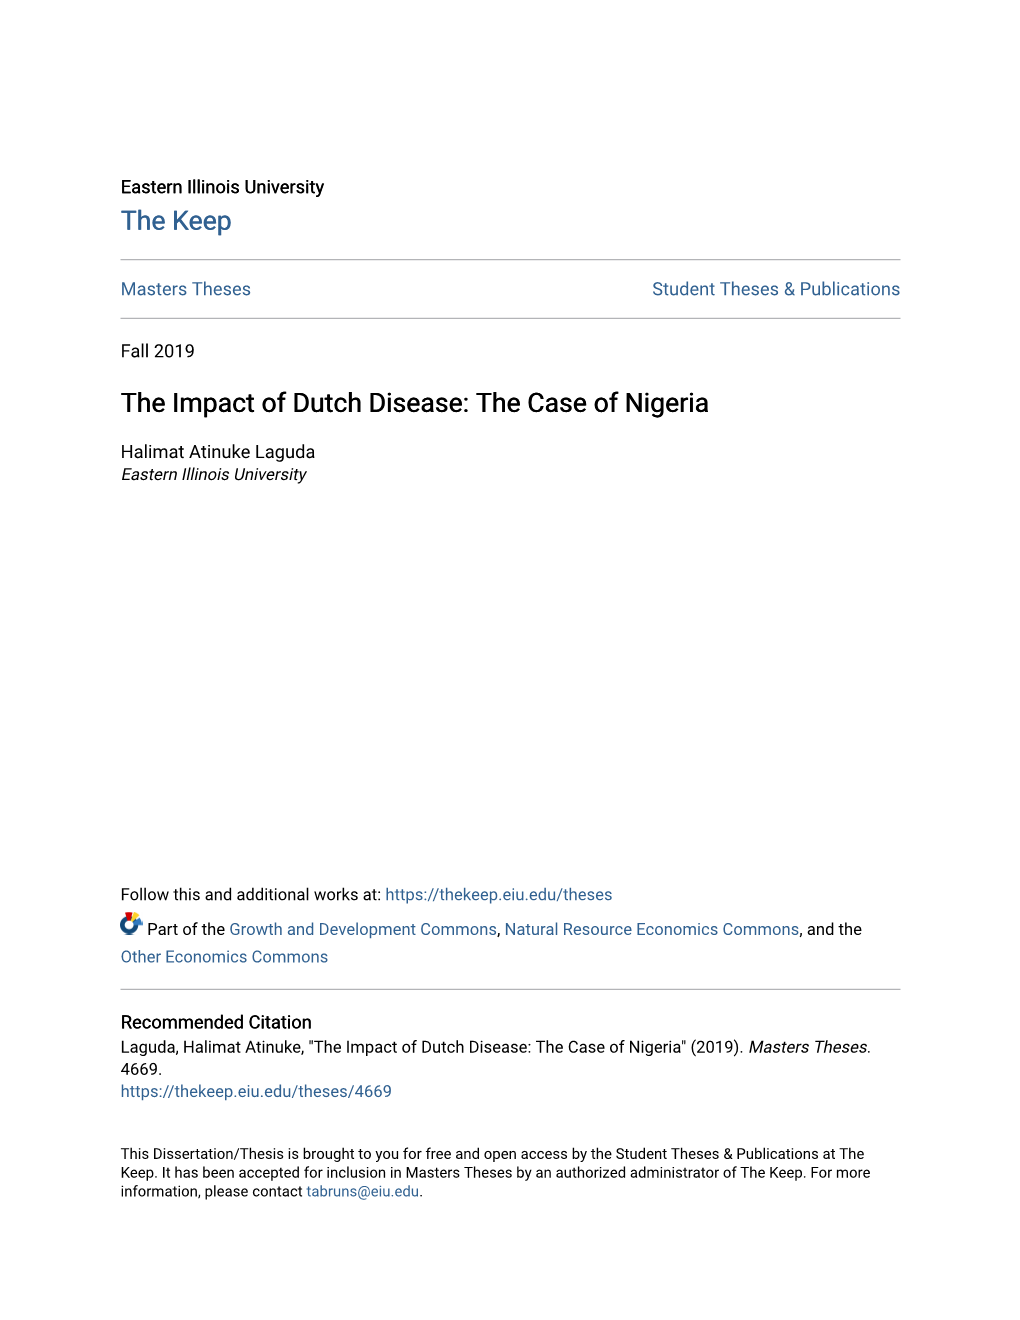 The Impact of Dutch Disease: the Case of Nigeria